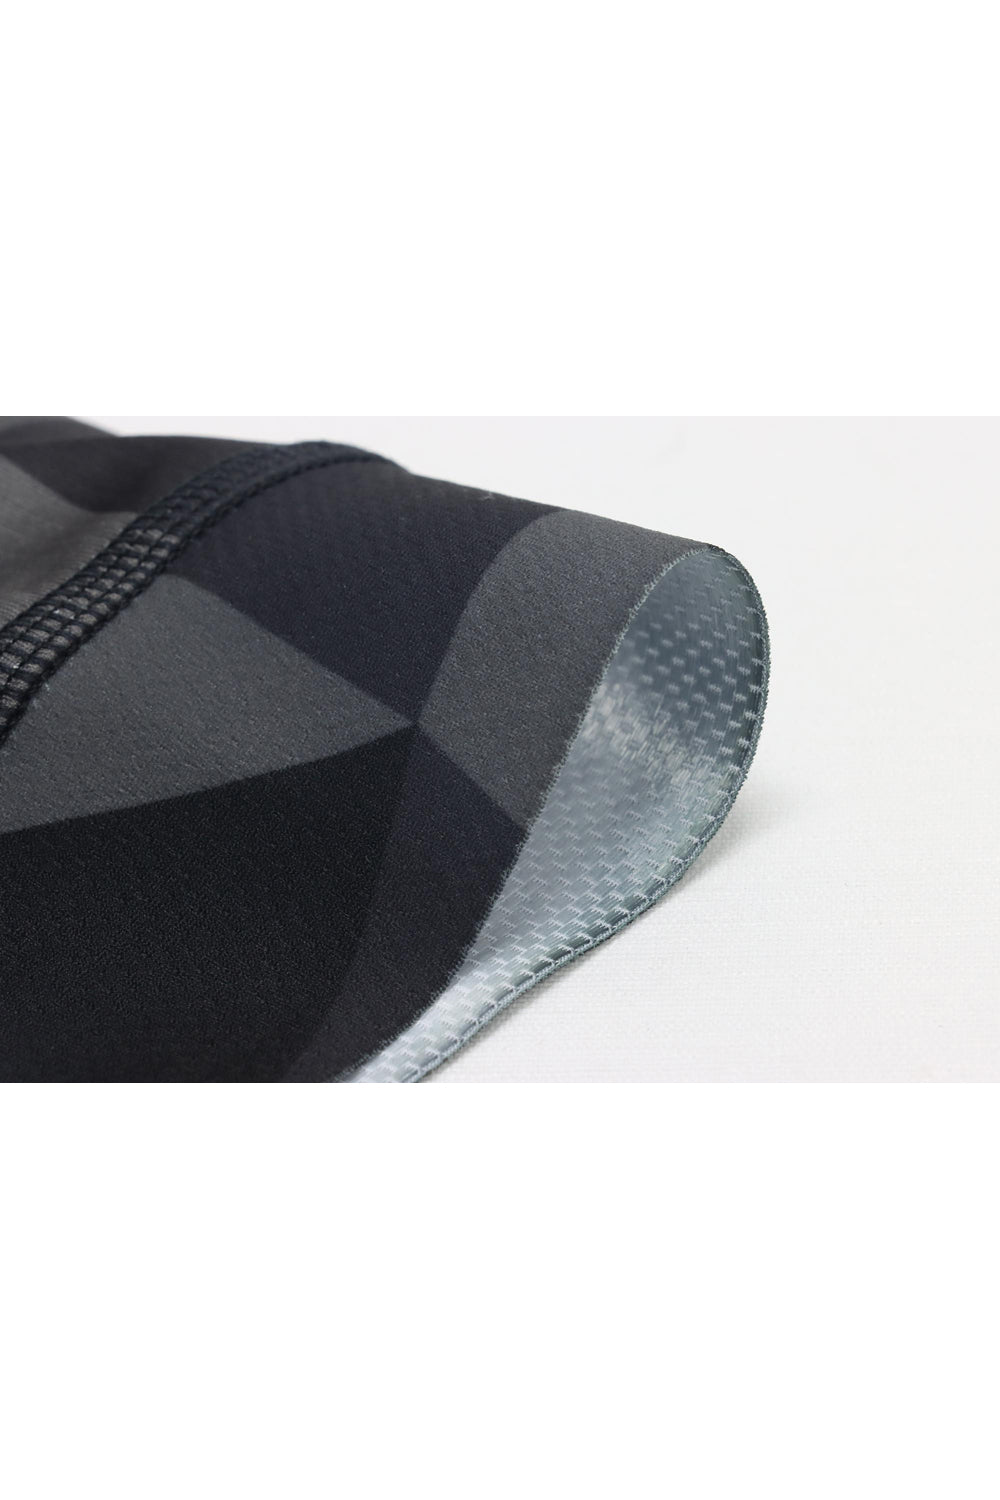 Sundried Geometric Men's Short Sleeve Training Jersey Short Sleeve Jersey Activewear